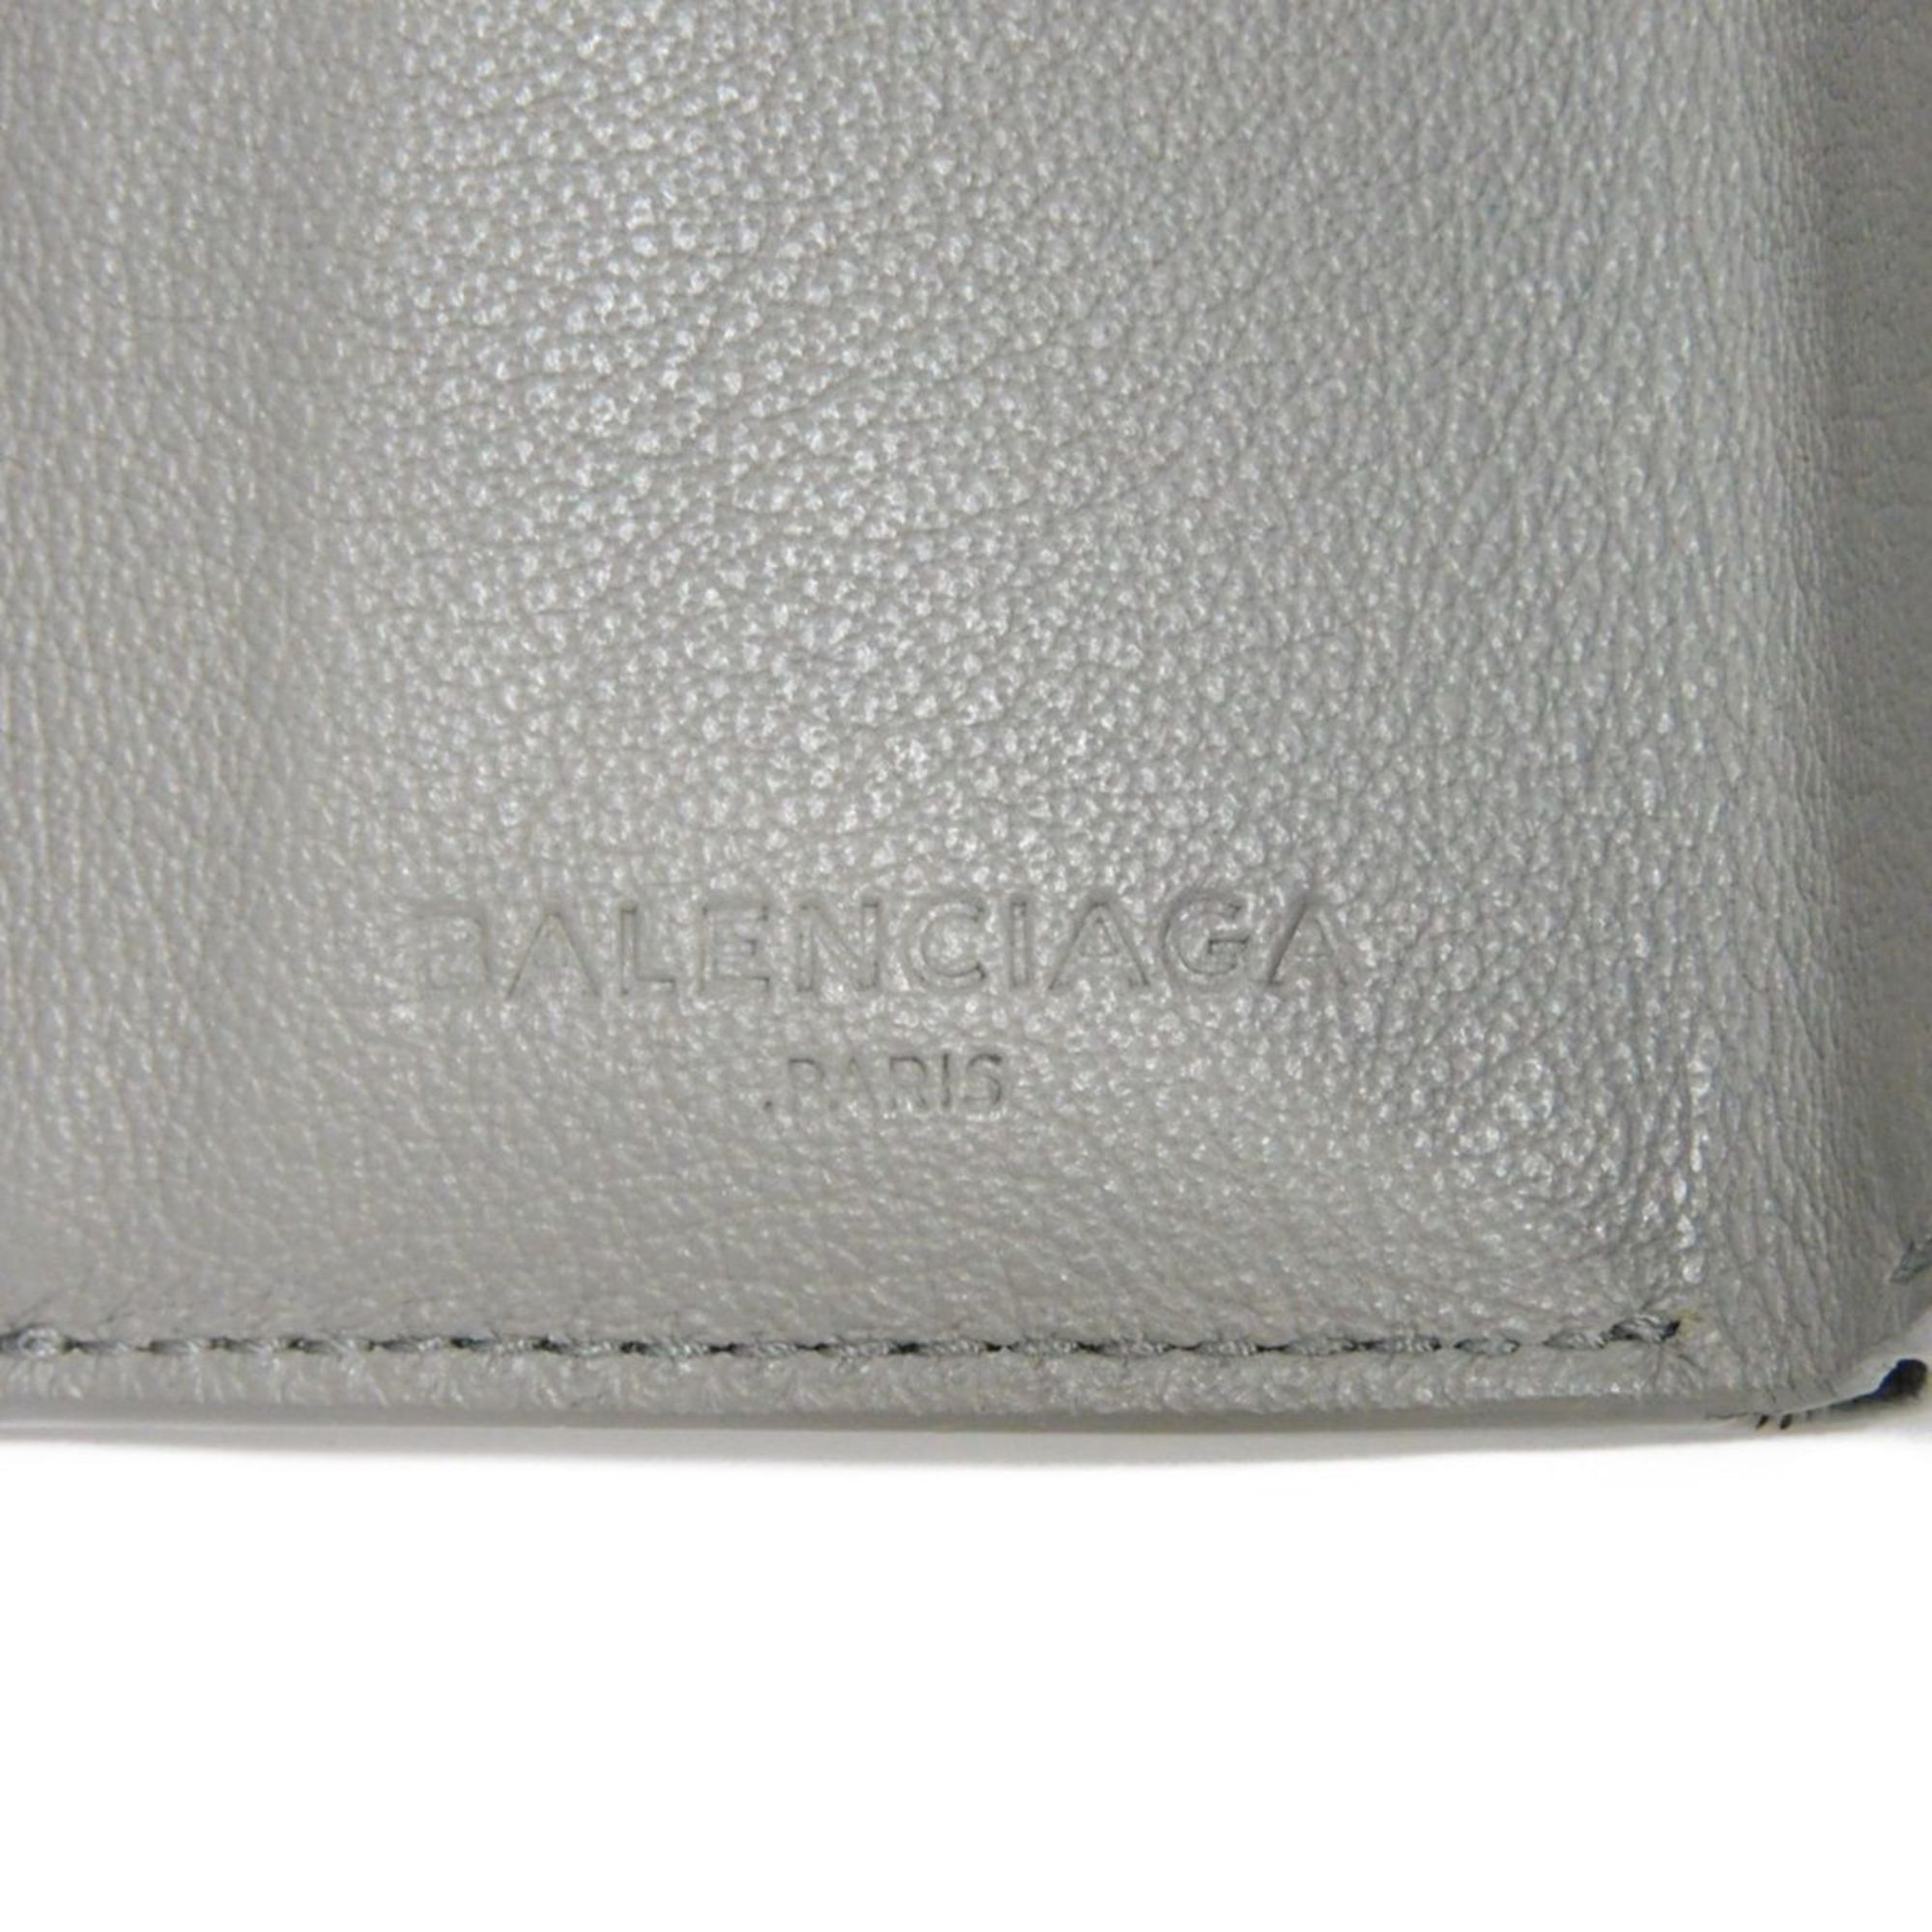 BALENCIAGA Trifold Wallet Paper Mini Foil Stamping Gray Compact Old Logo Gliacie 391446 DLQ0N 1320 Men's Women's Billfold